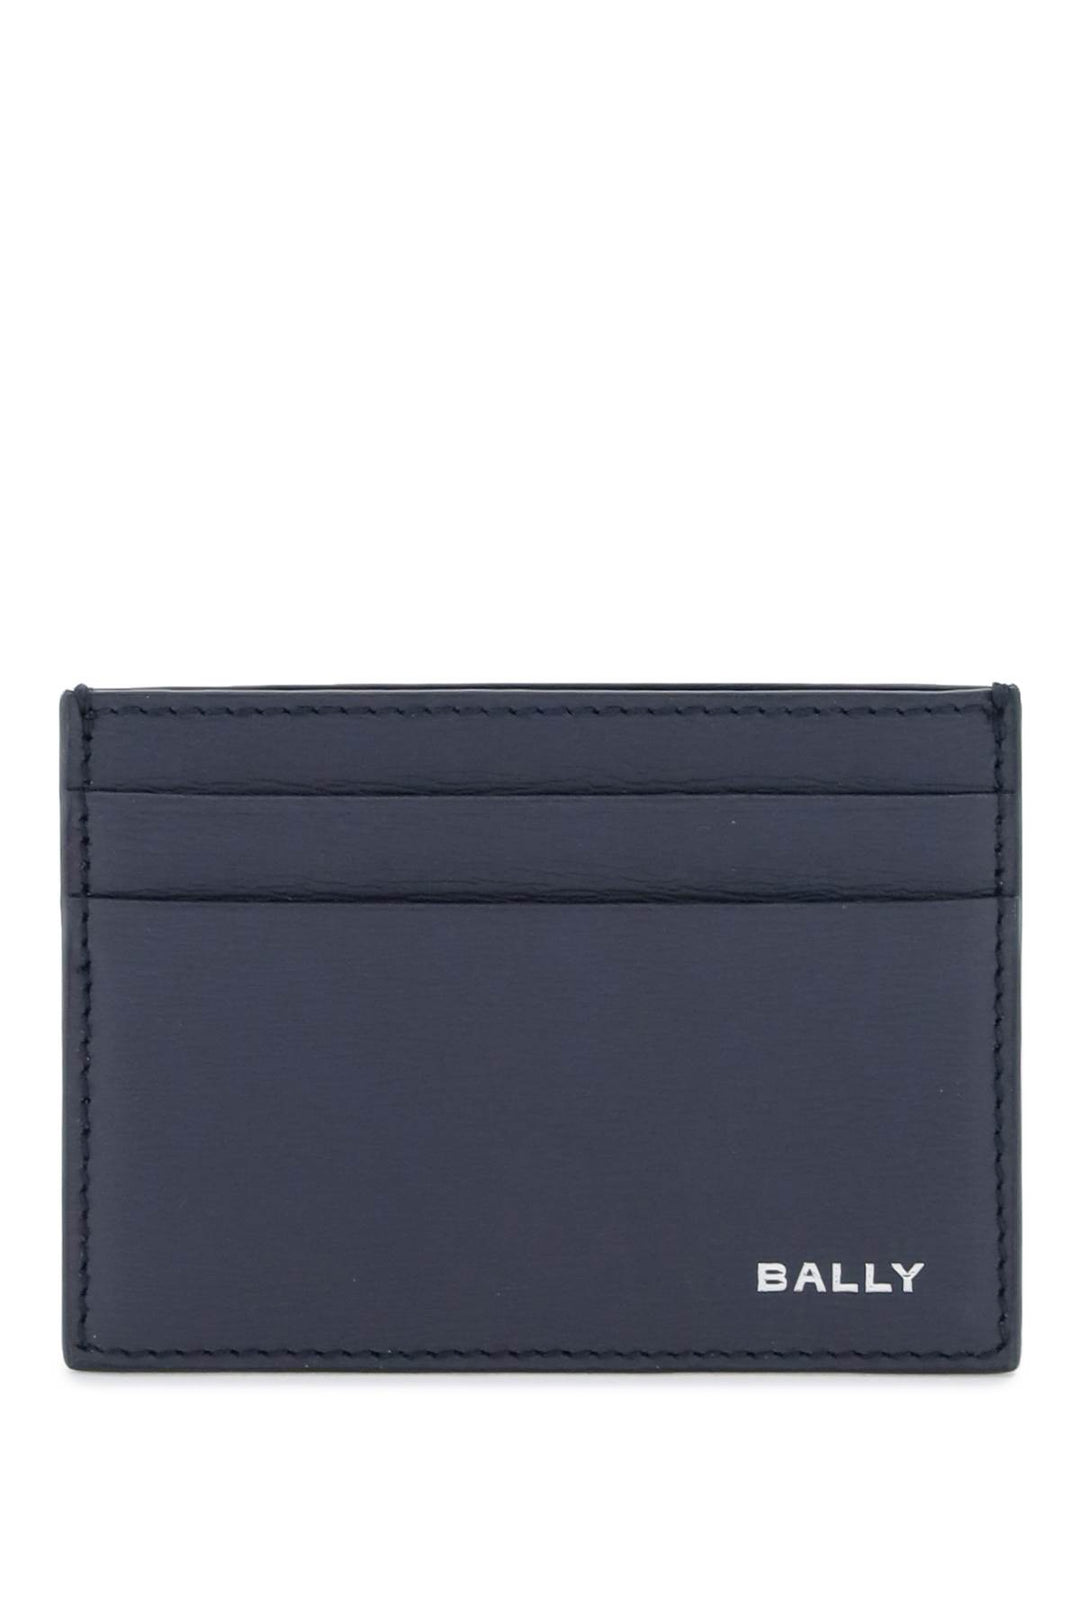 Bally Leather Crossing Cardholder   Blu